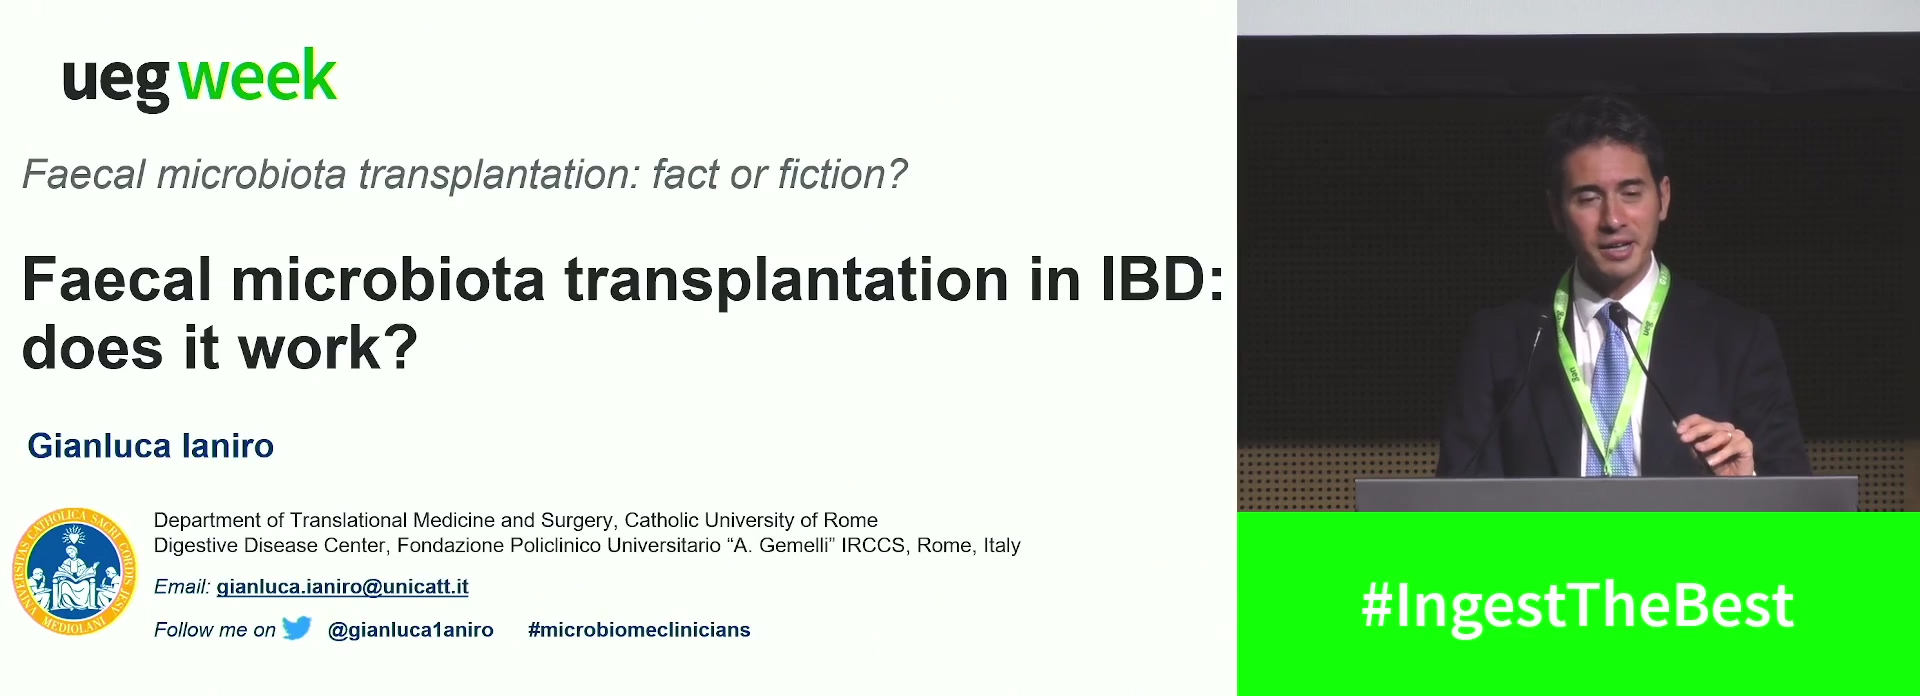 Faecal transplantation in IBD: Does it work?